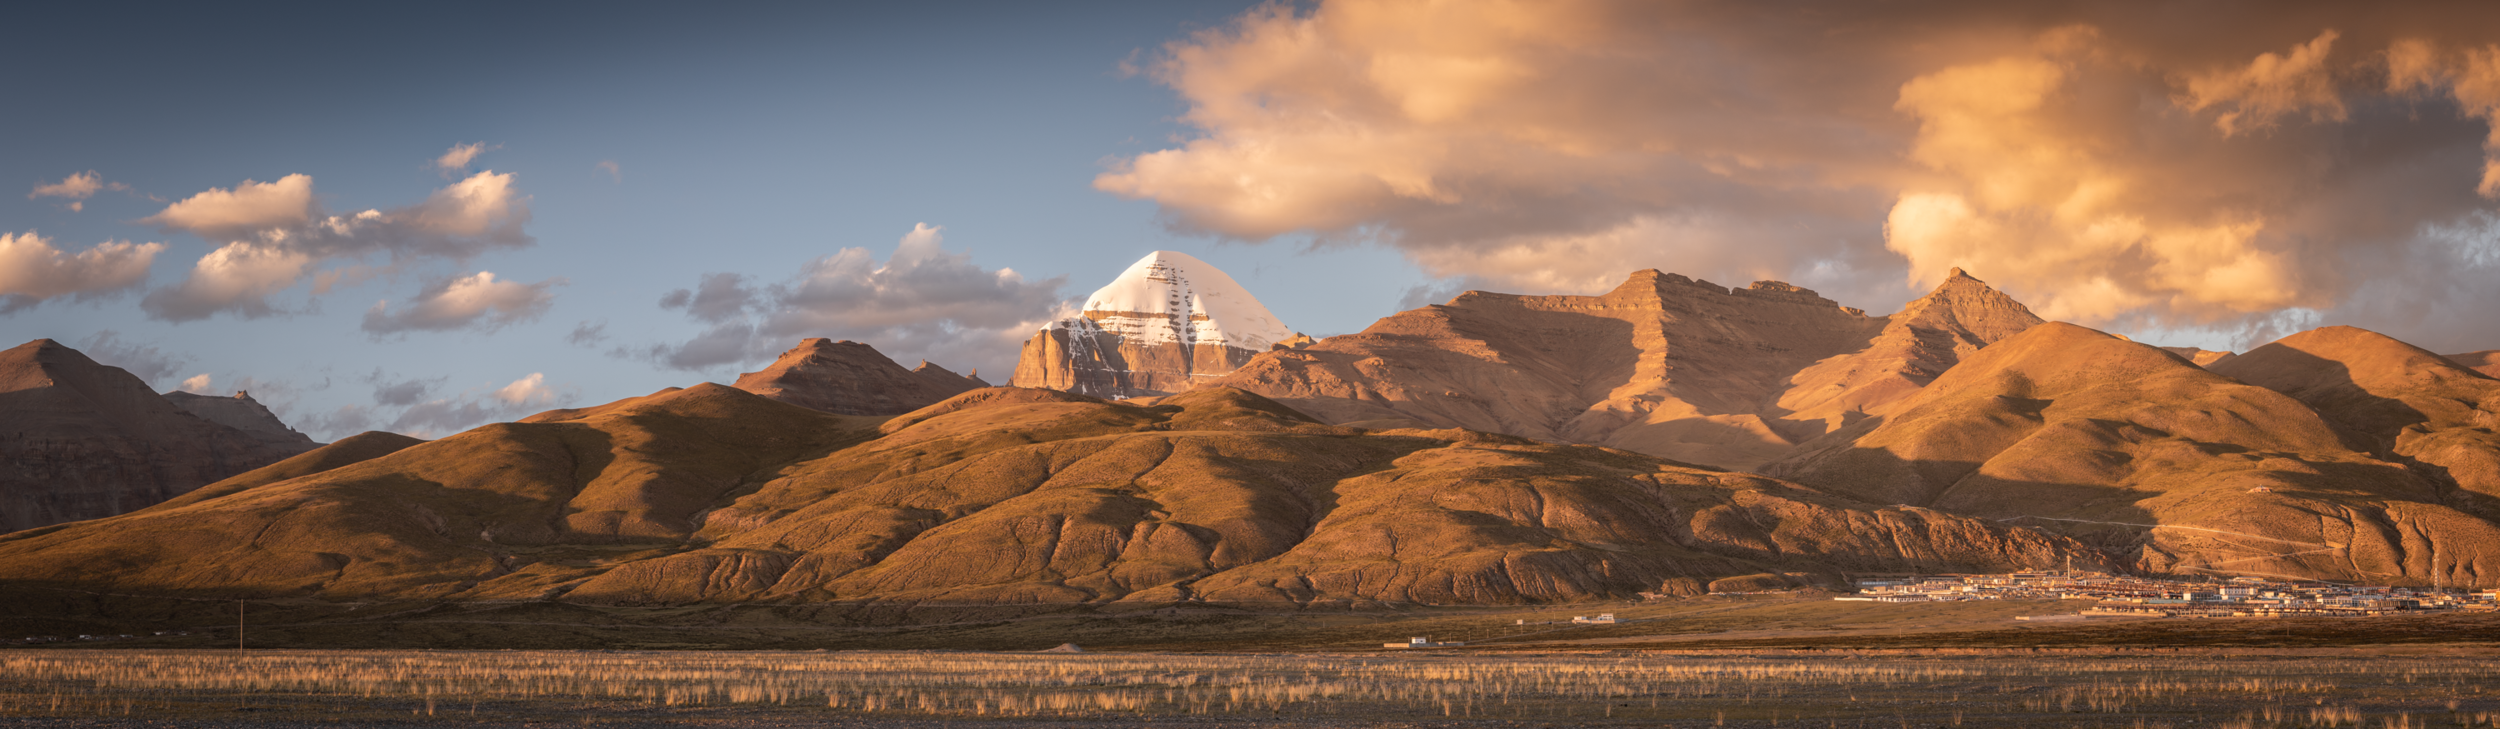 Der Berg Kailash mit dem Kangrinboqe-Gipfel in Tibet